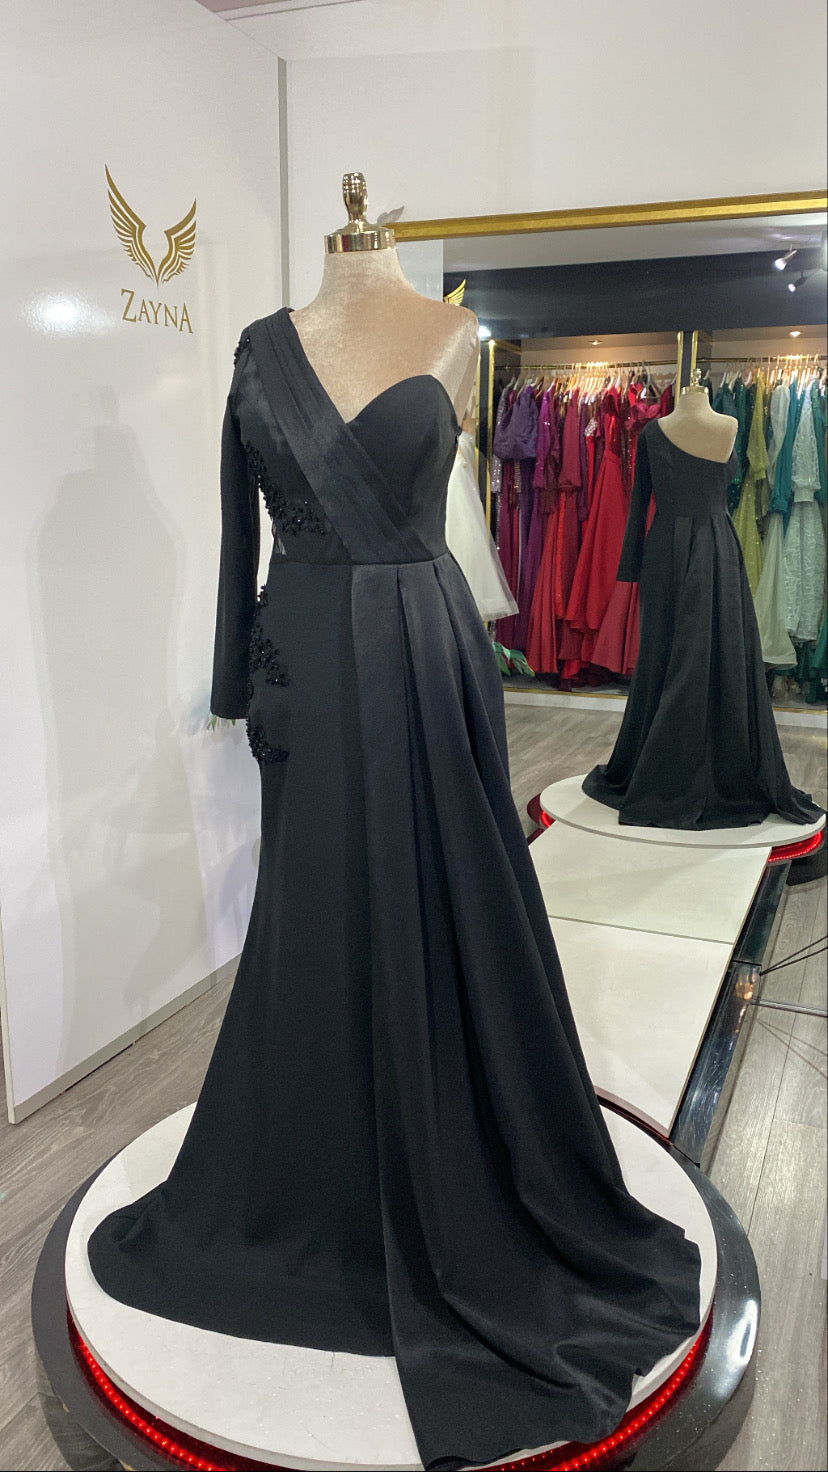 Our elegant black dress